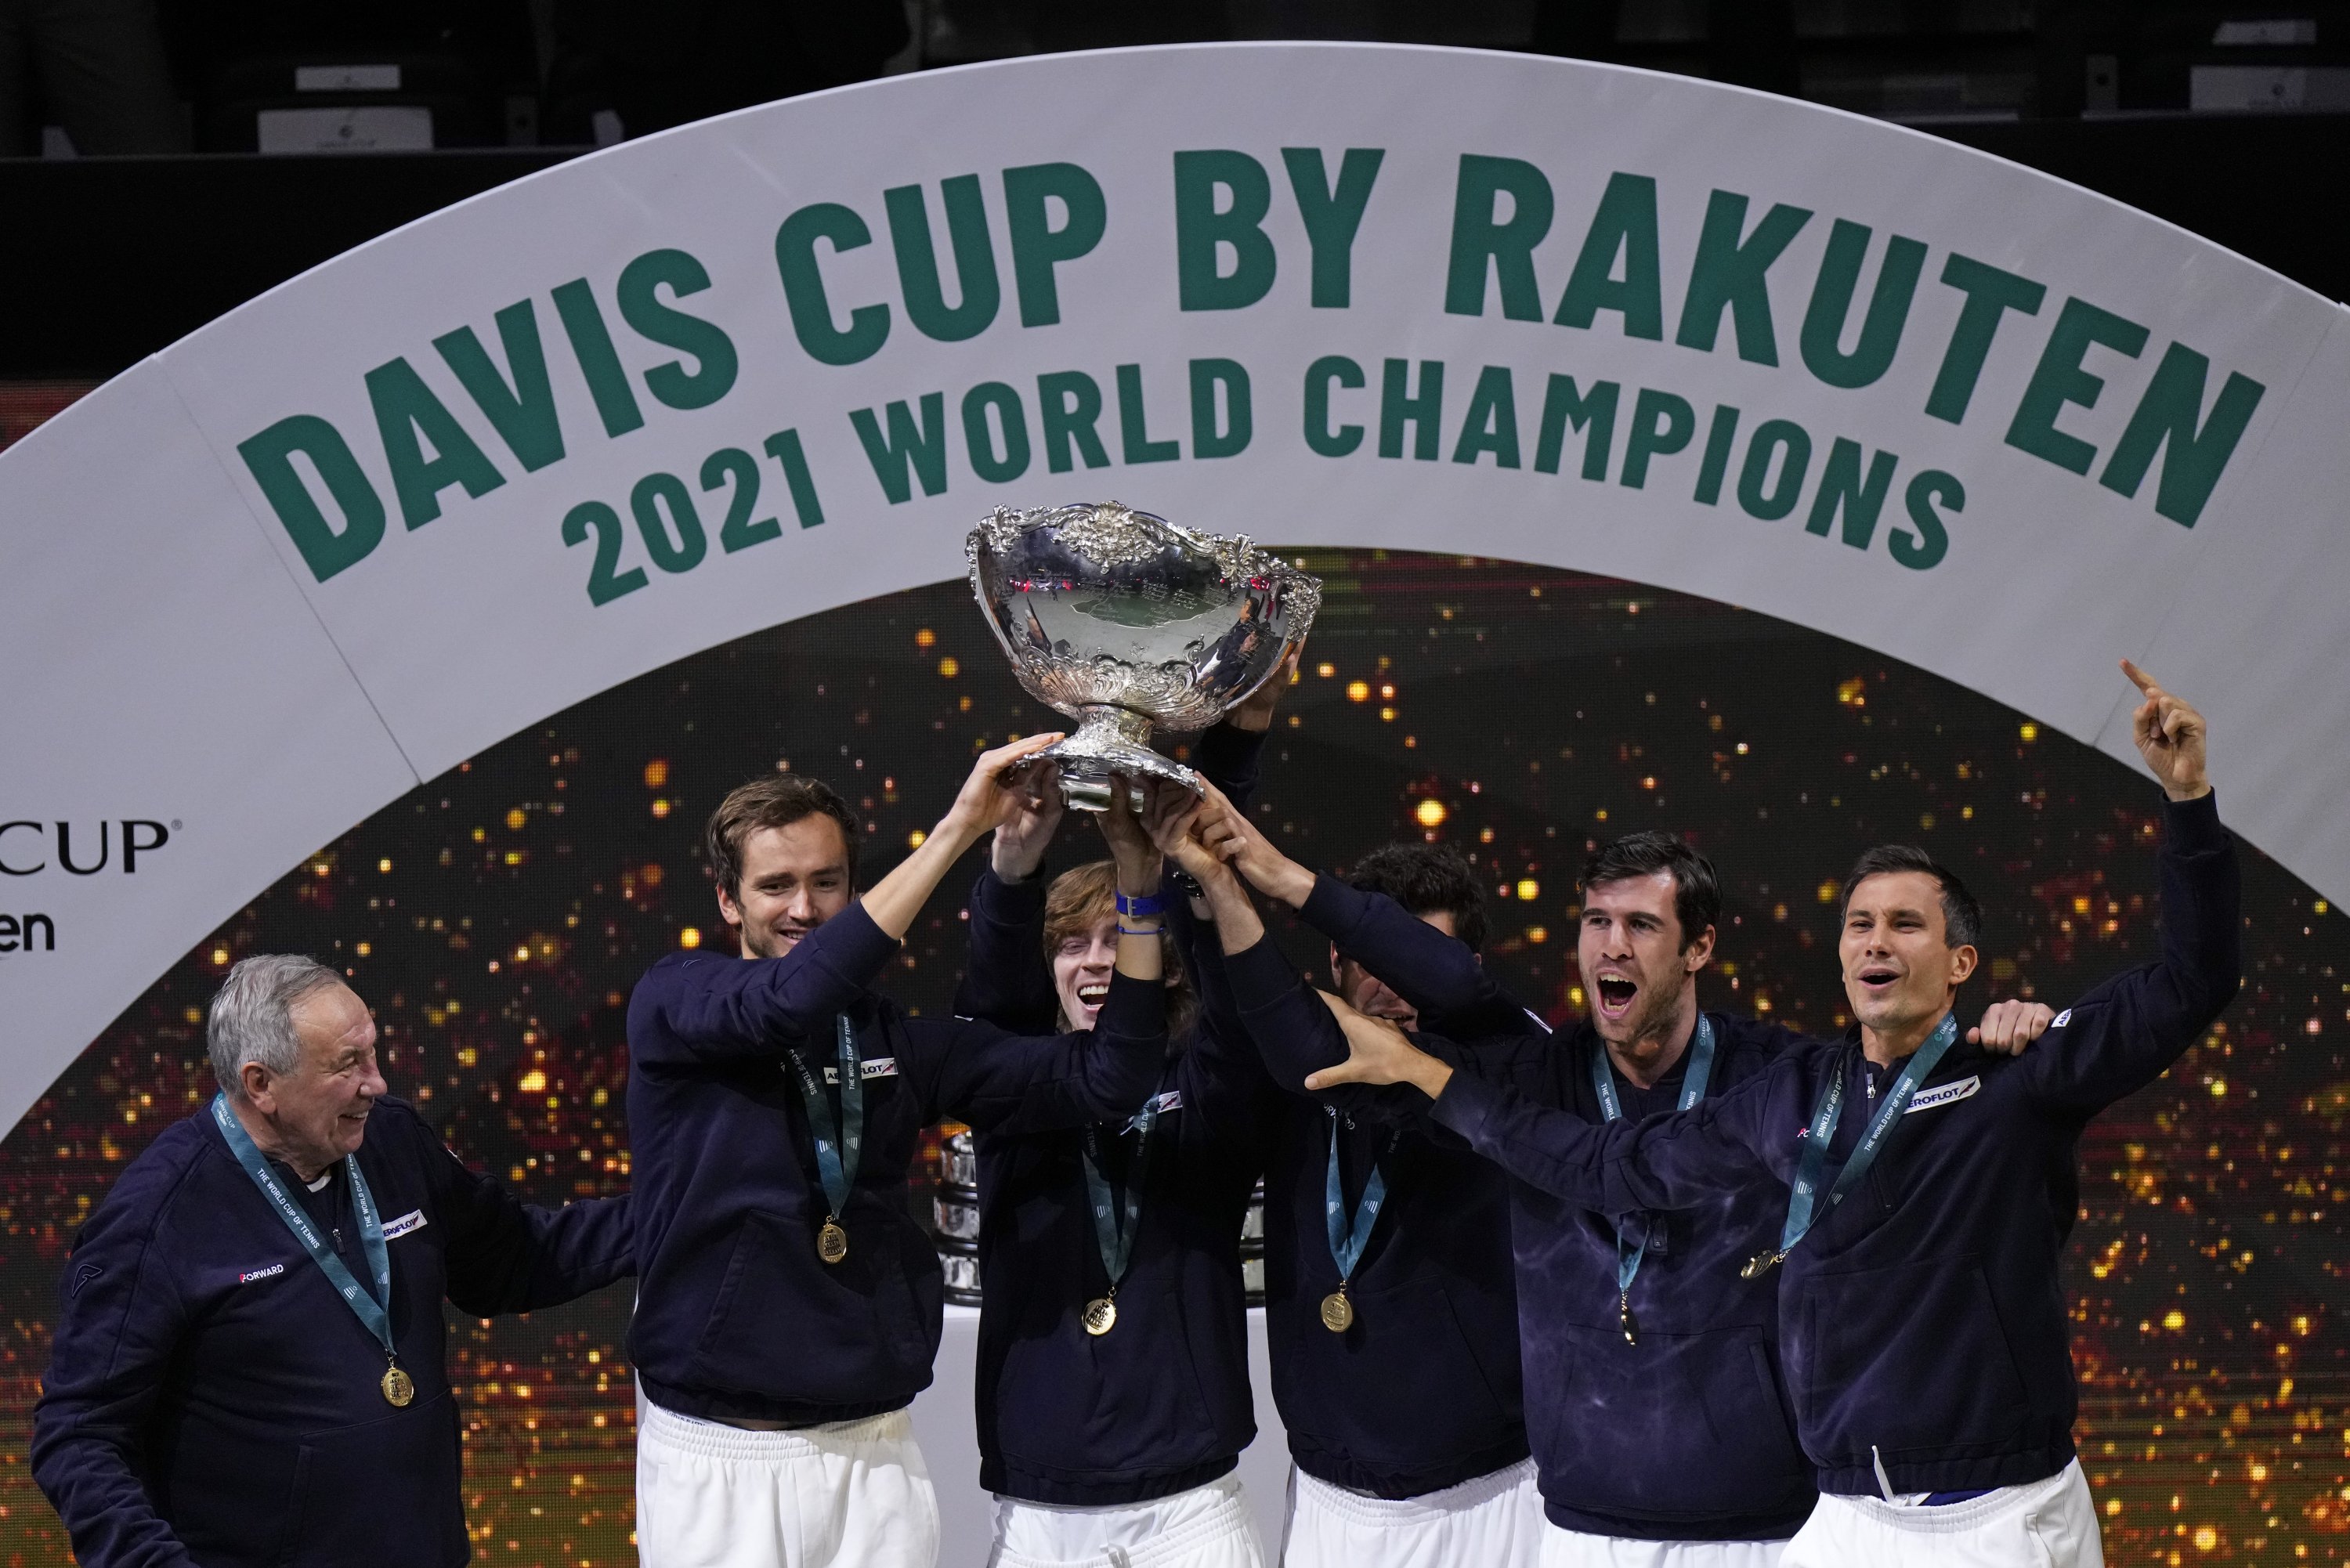 Davis-Cup